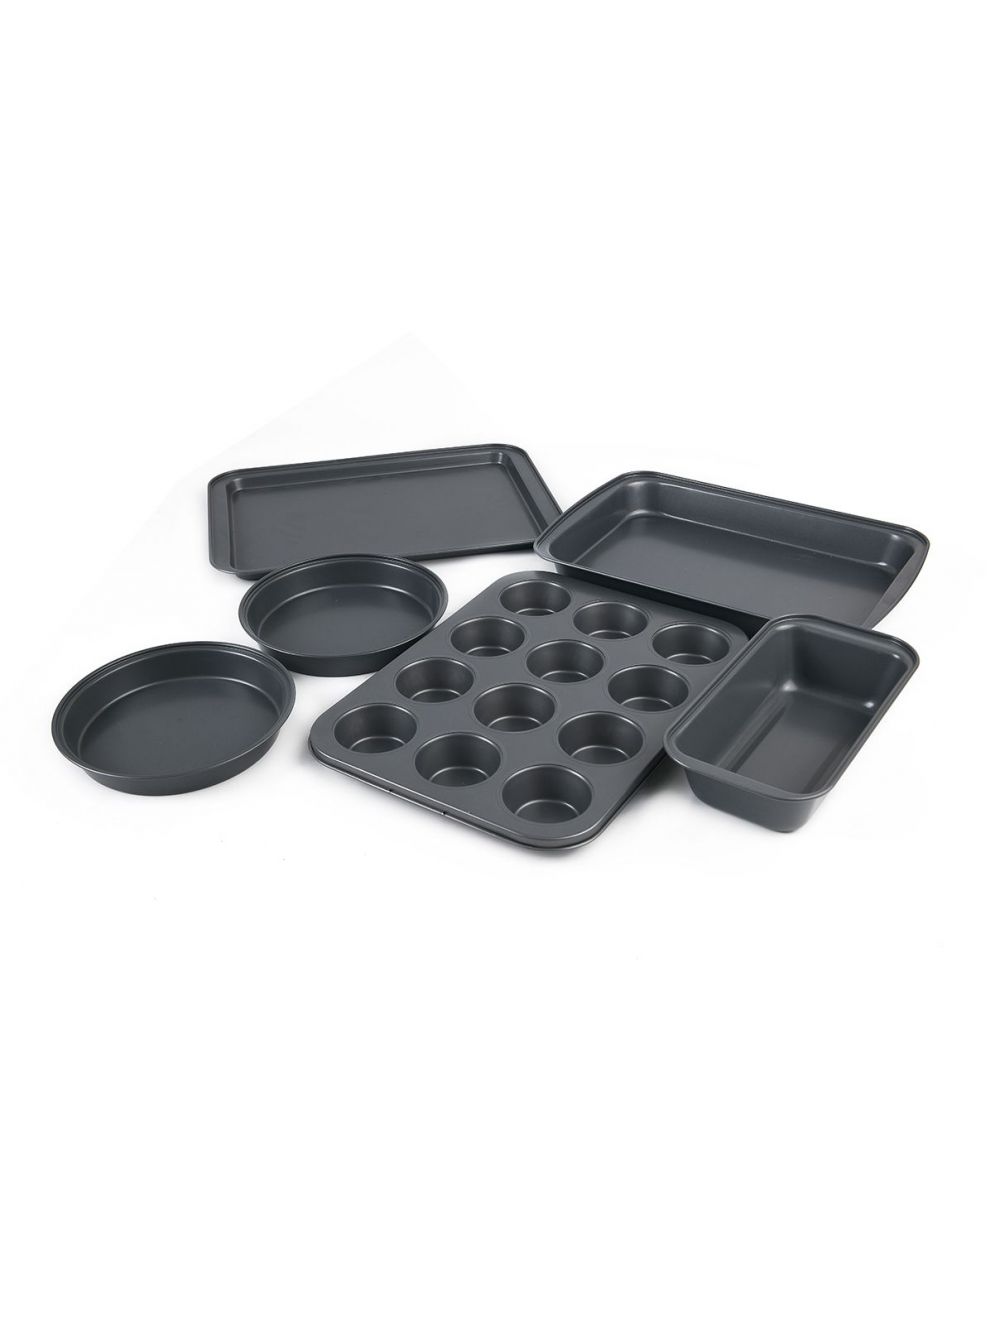 Blackstone 6-Piece Nonstick Oven Baking Set-HLFBK07001